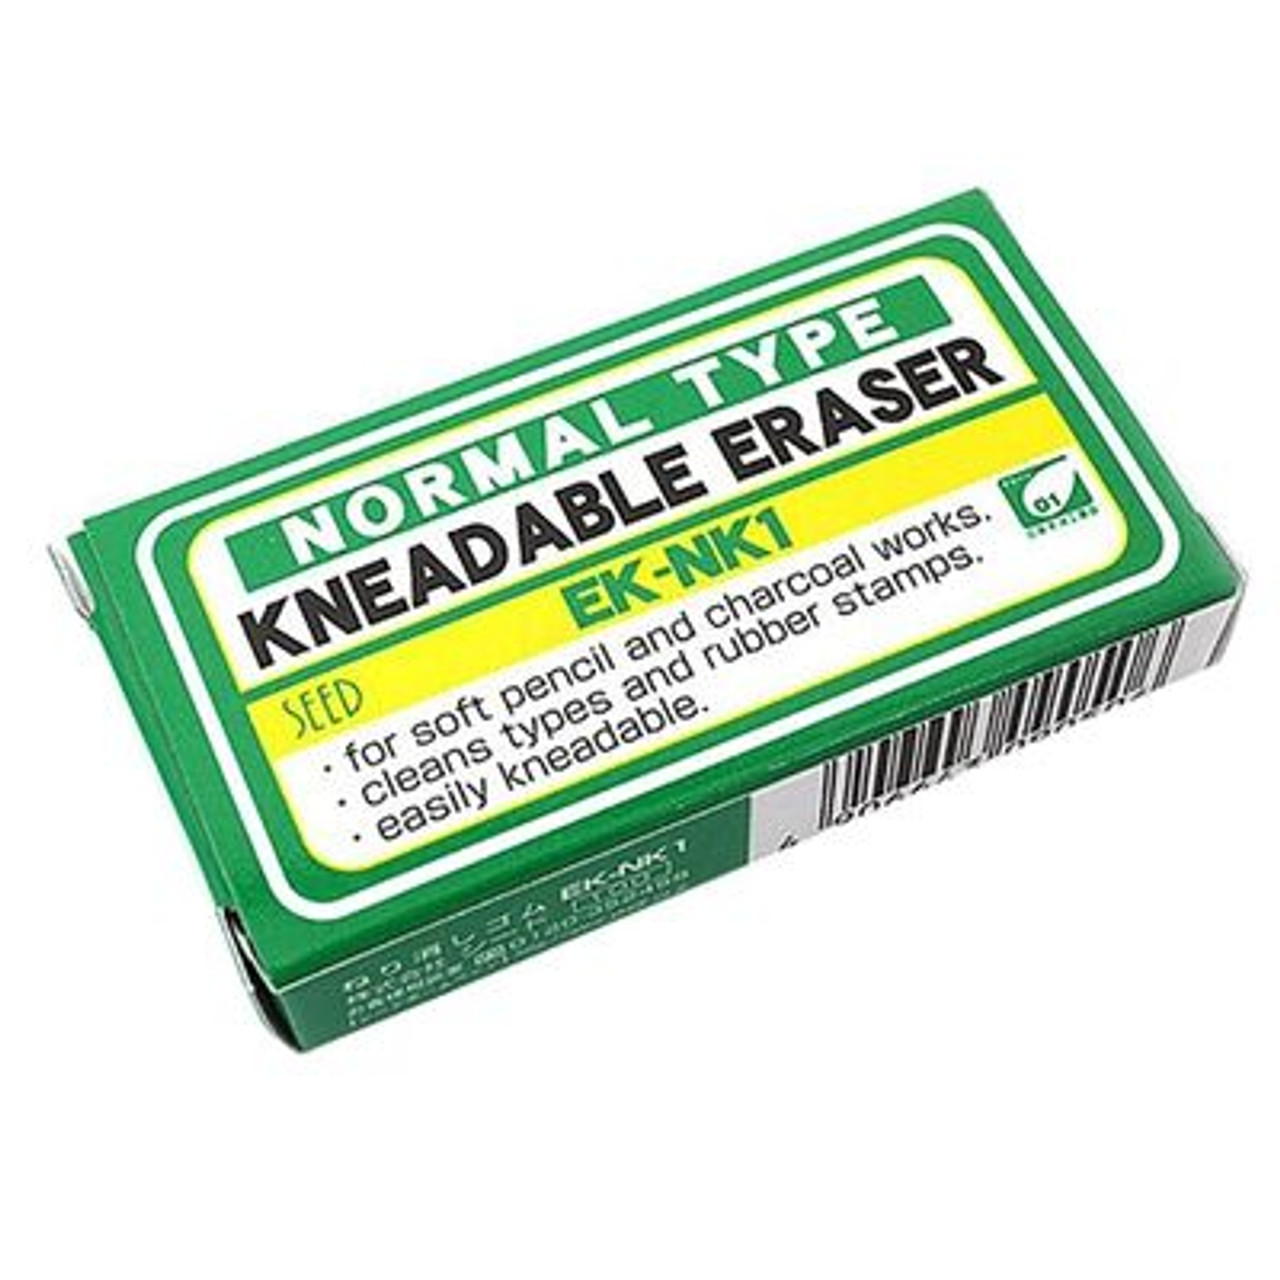 NK1 Seed Kneadable Eraser - John Neal Books